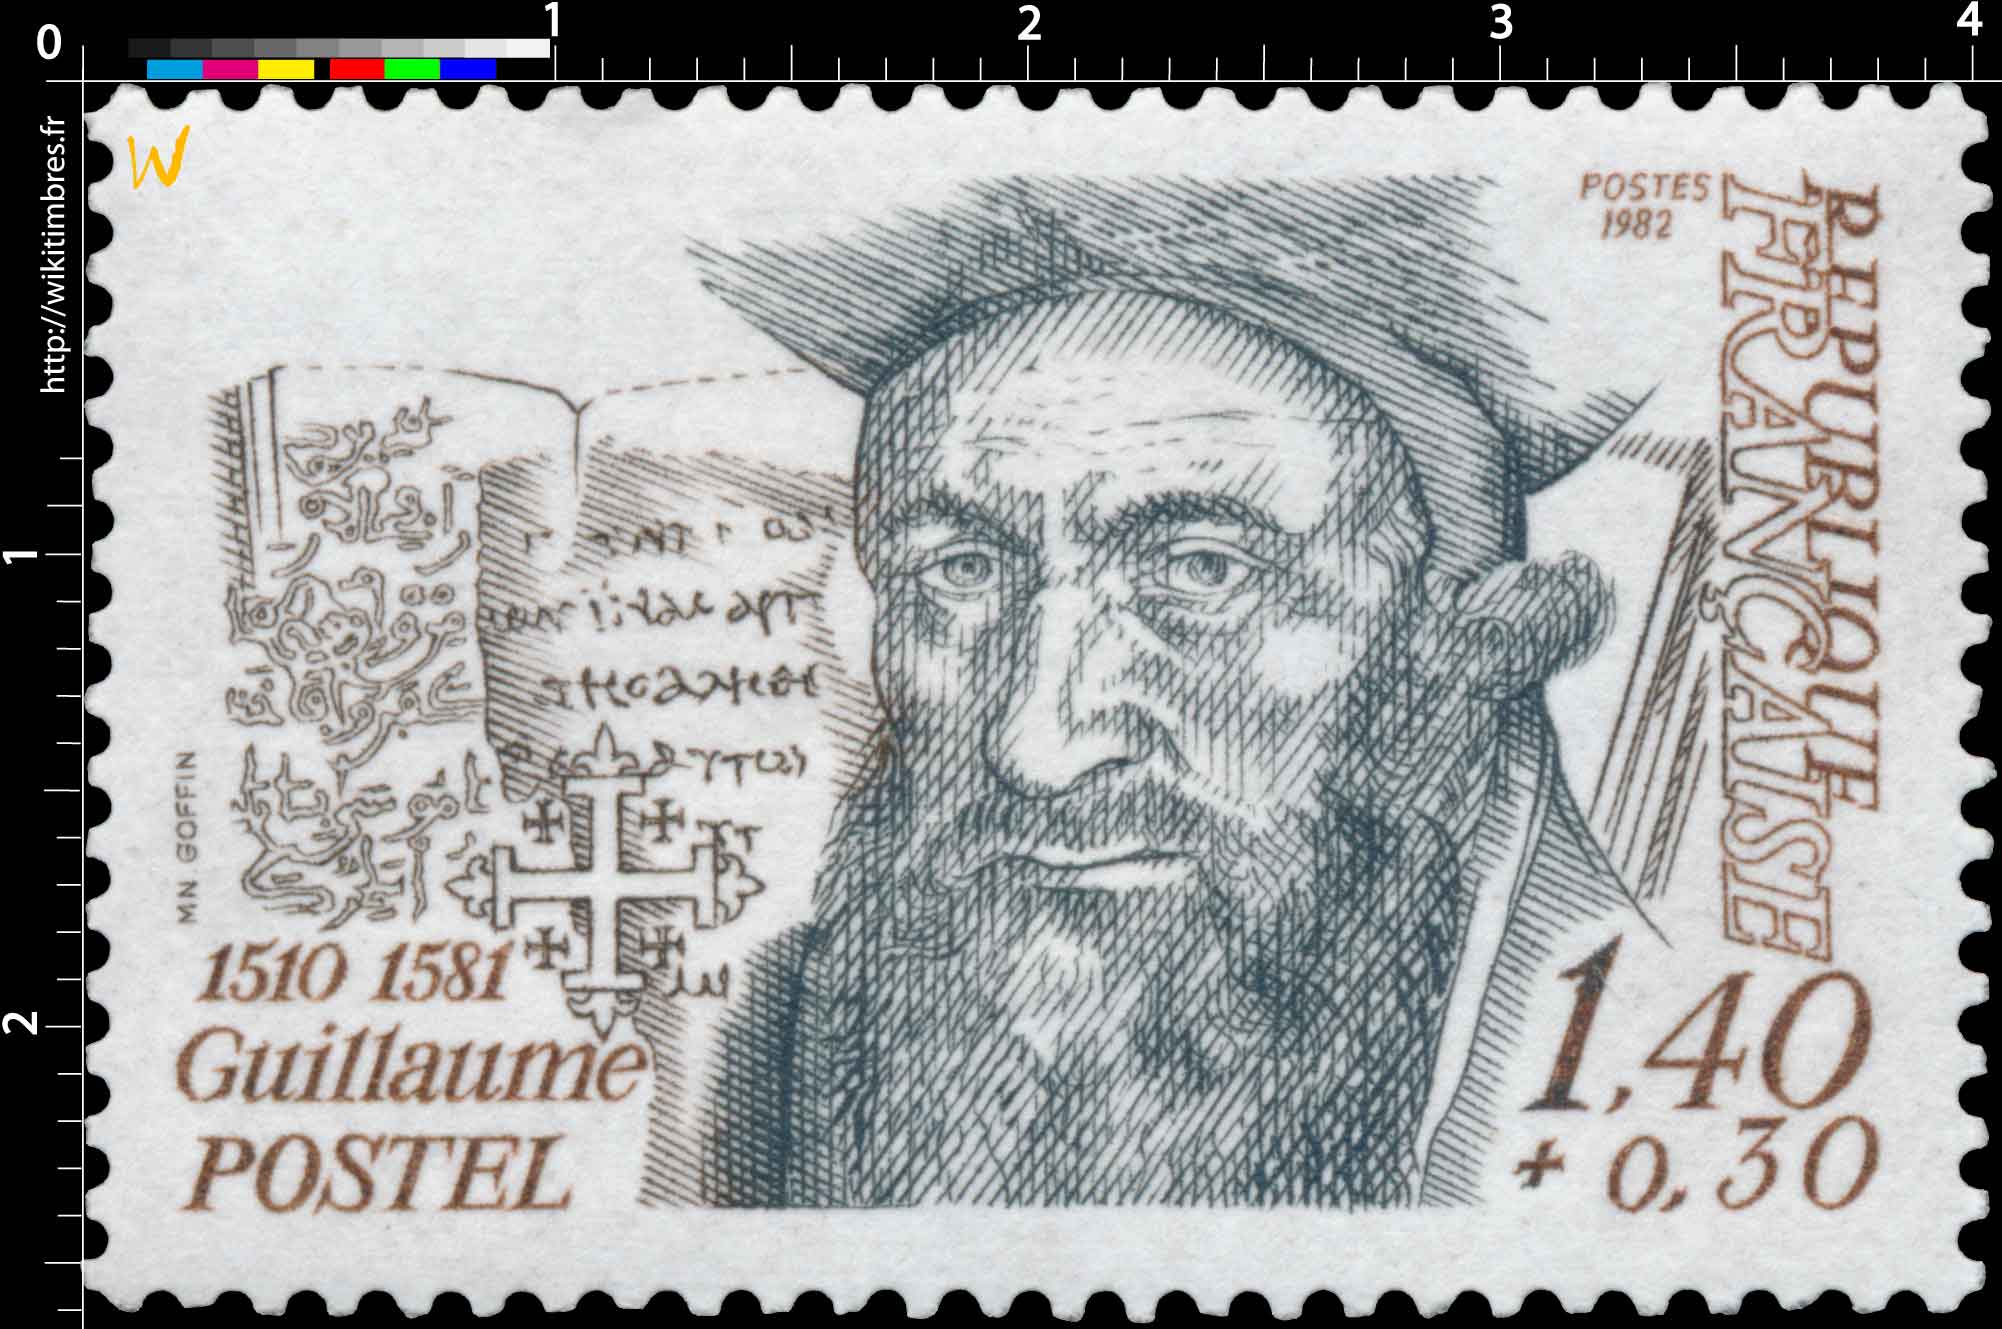 1982 Guillaume POSTEL 1510-1581